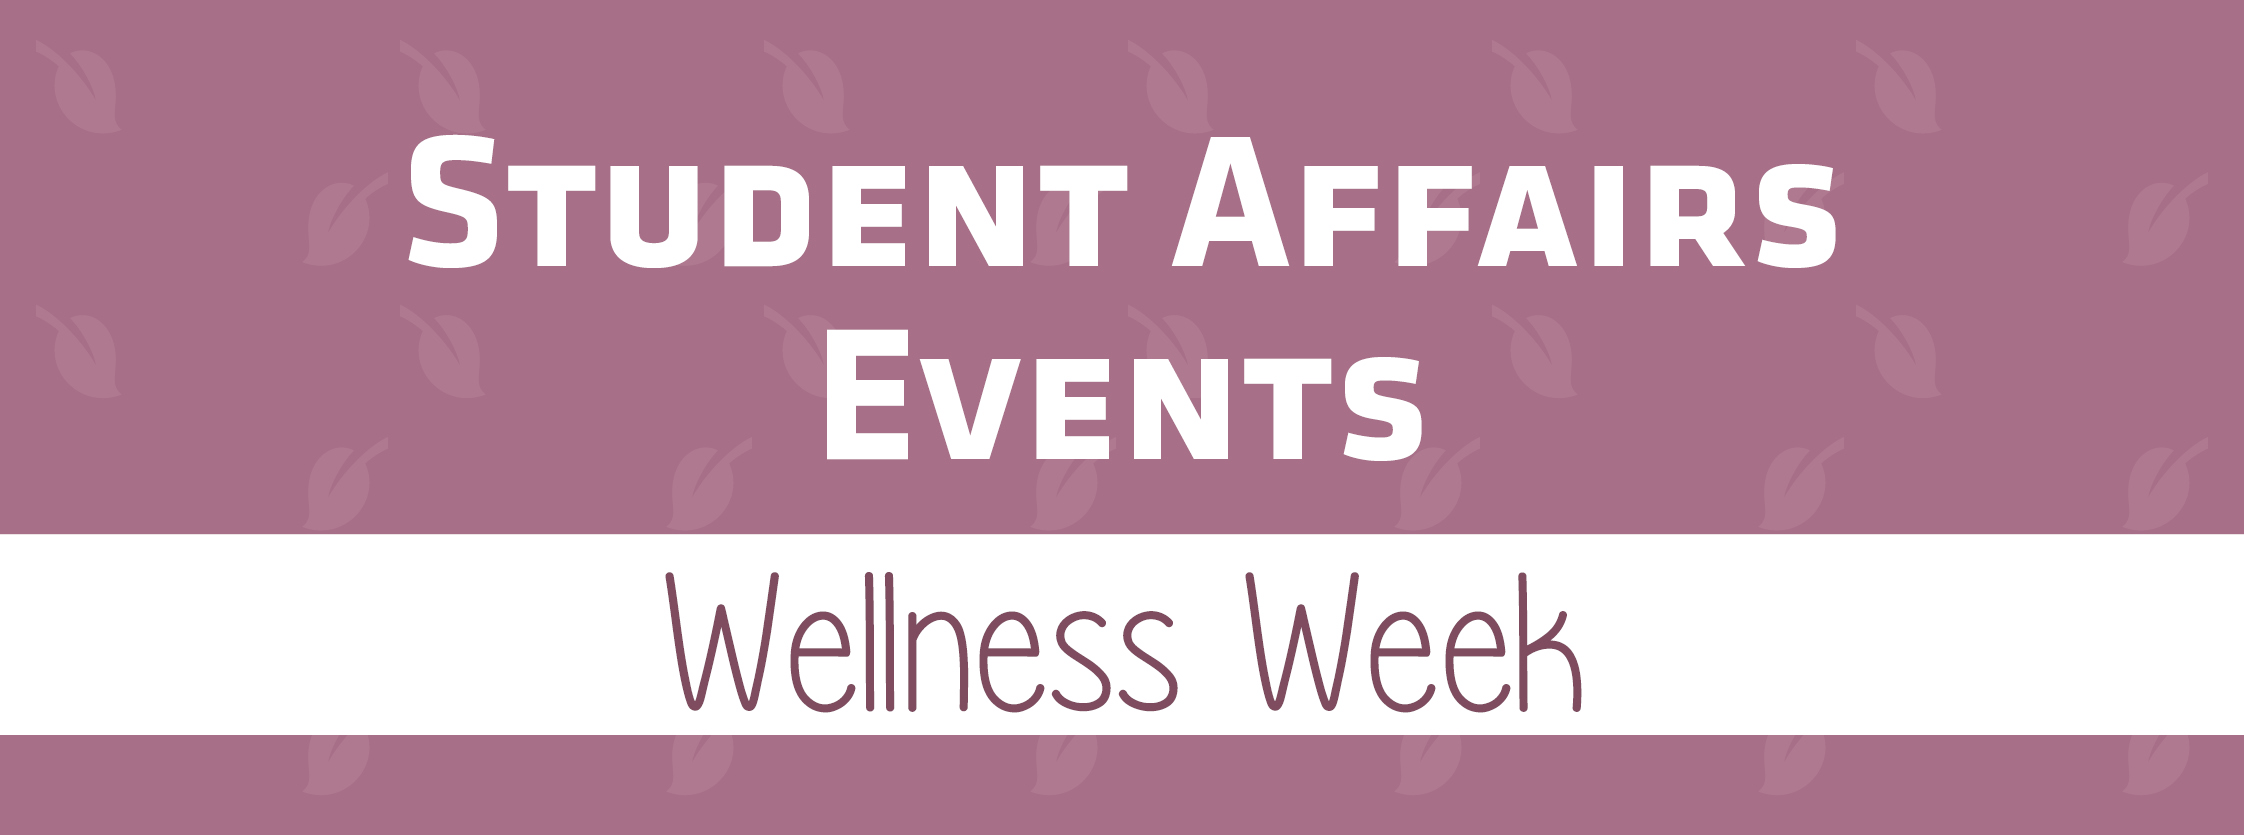 Student Affairs Events | Wellness Week